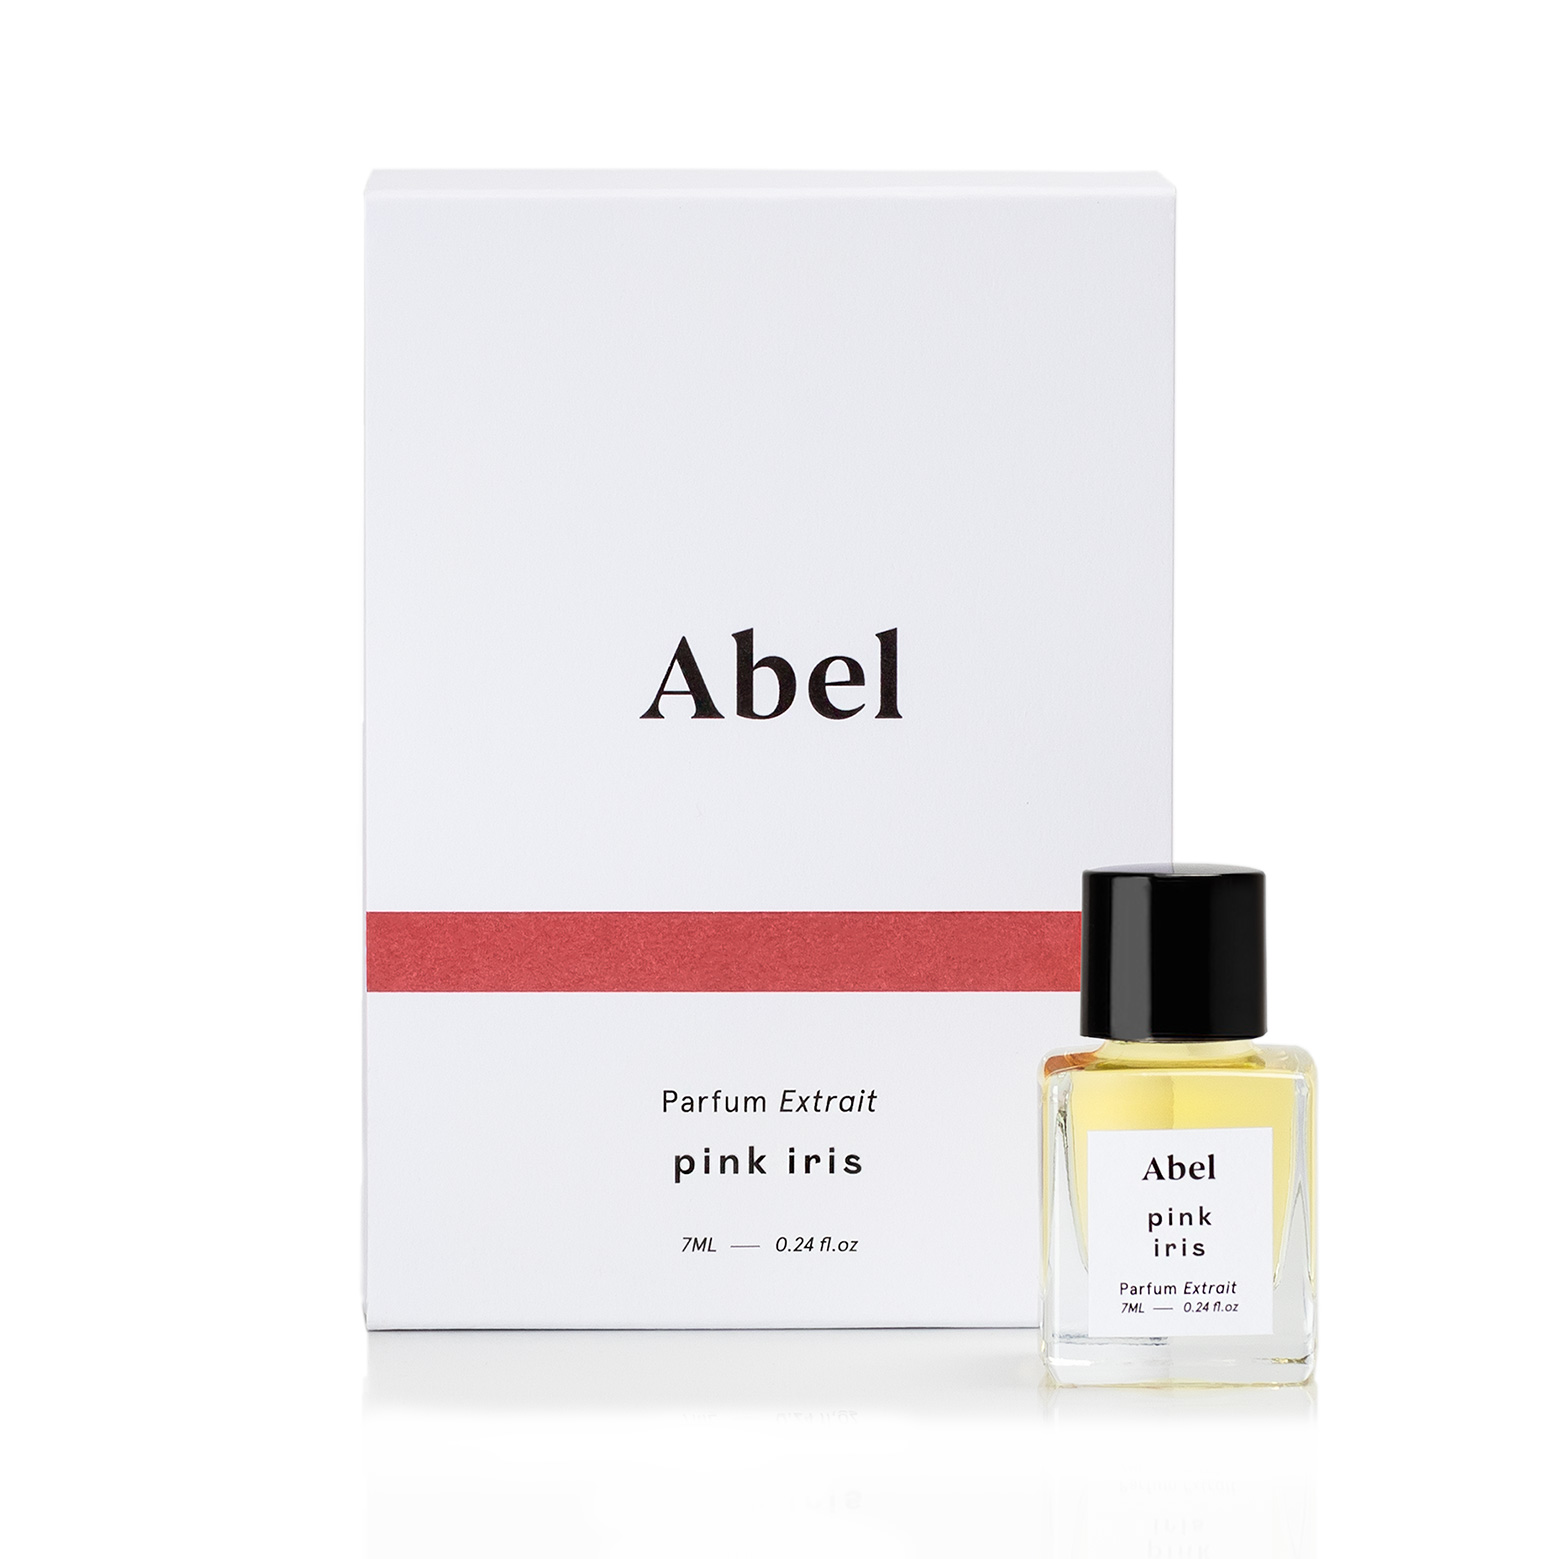 Abel Odor Pink Iris Parfum Extrait 7ml.